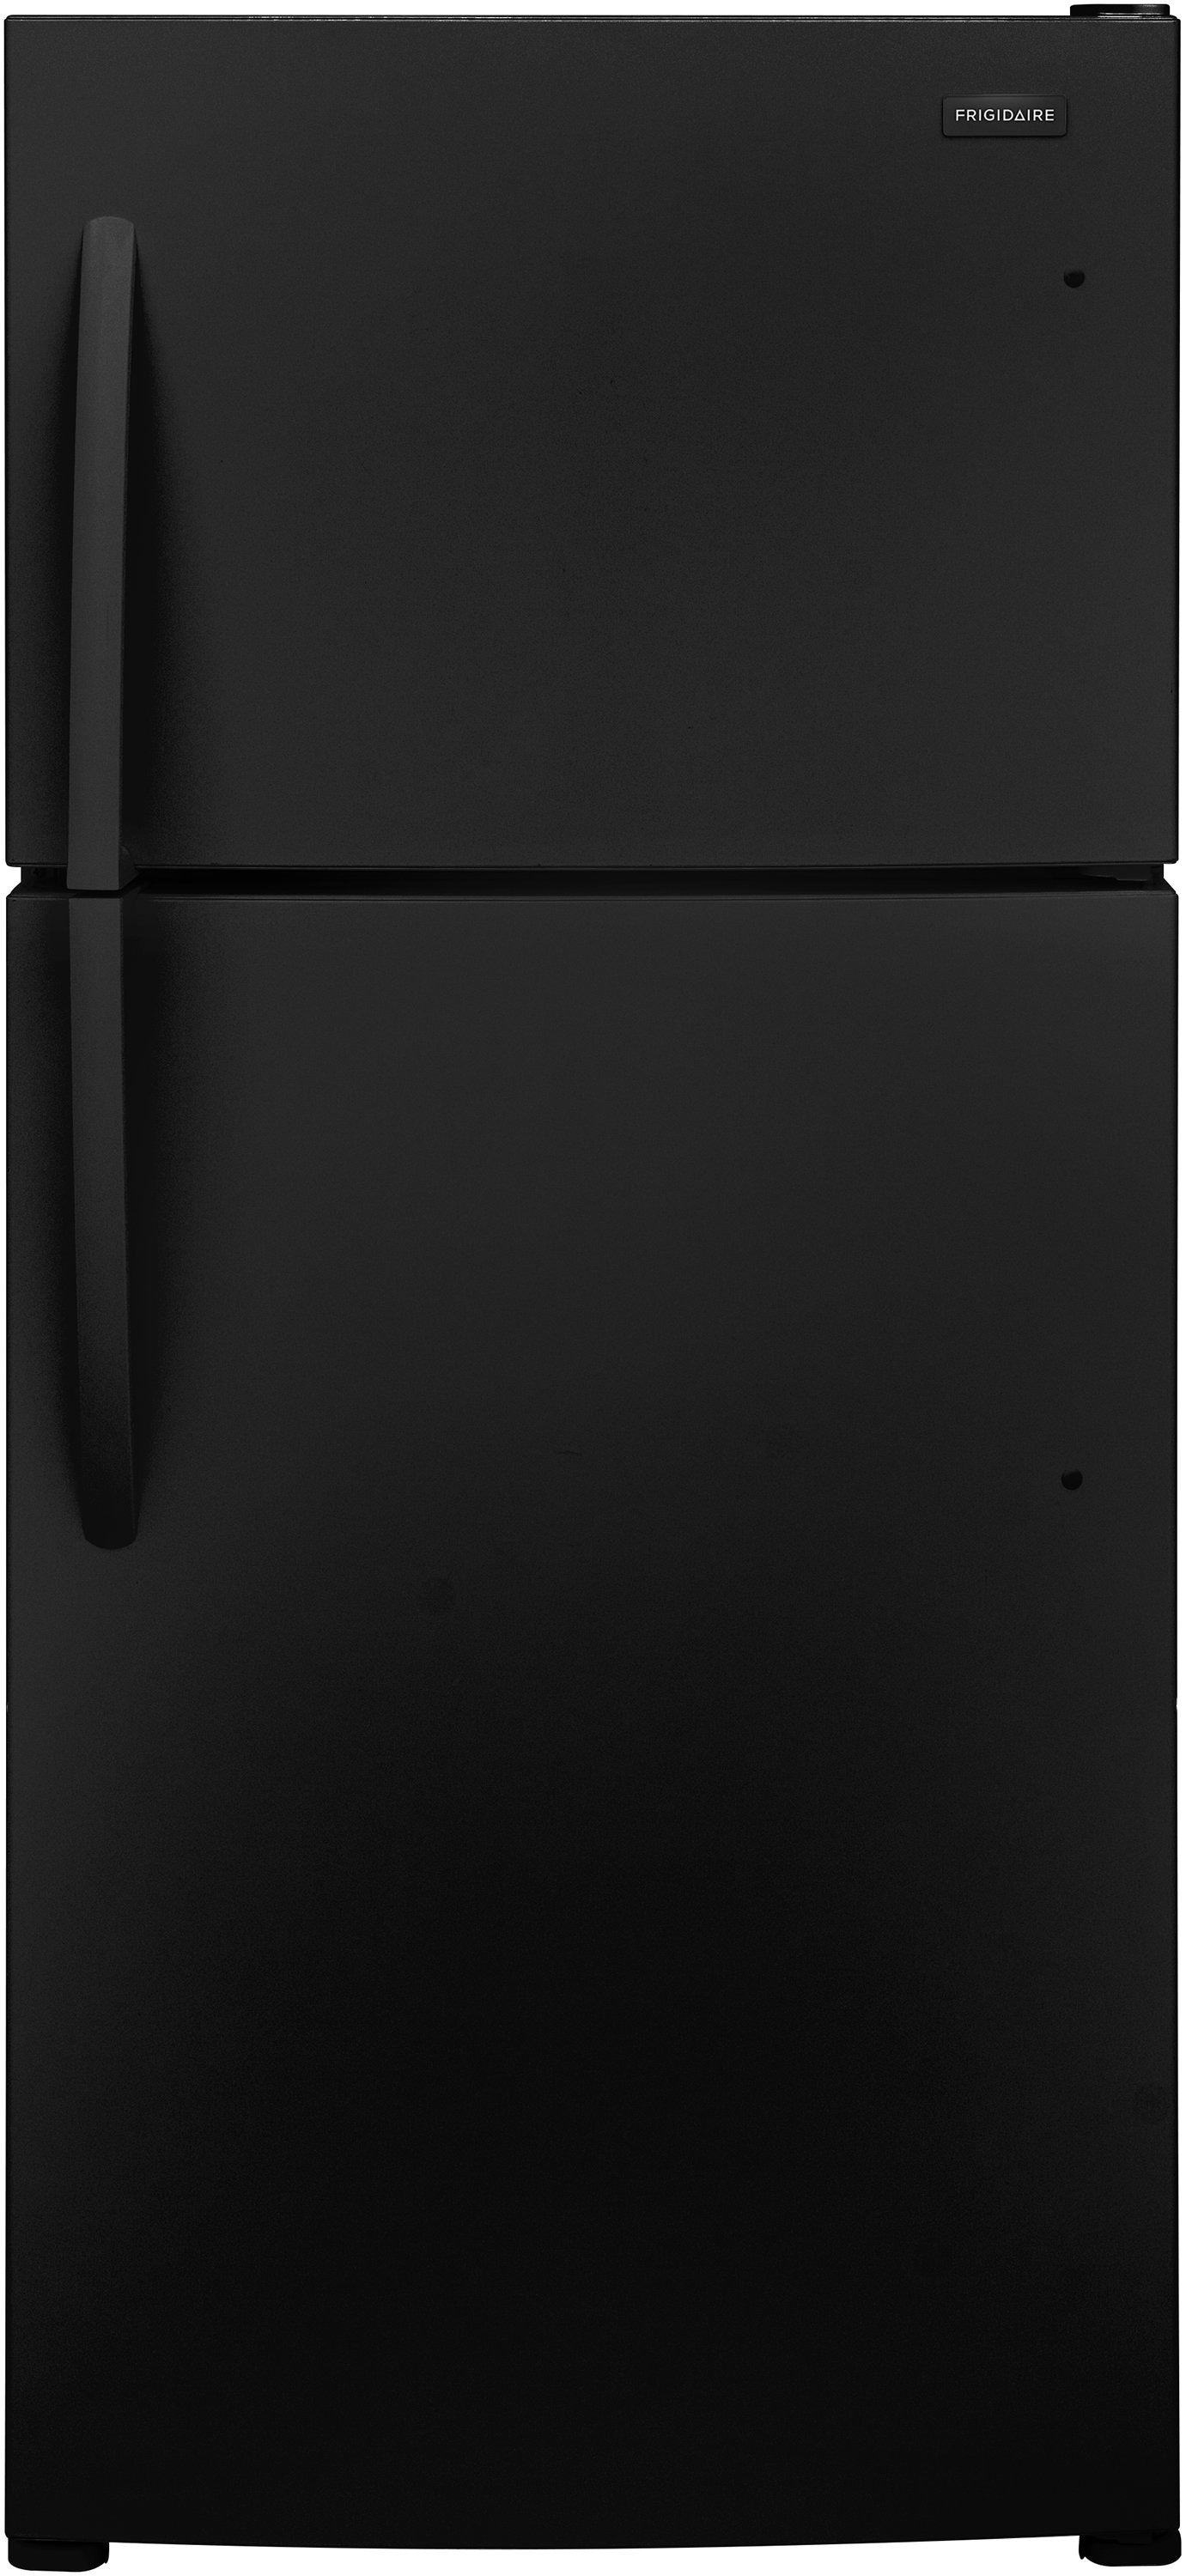 Frigidaire 20-cu ft Top-Freezer Refrigerator (Black) ENERGY STAR in the ...